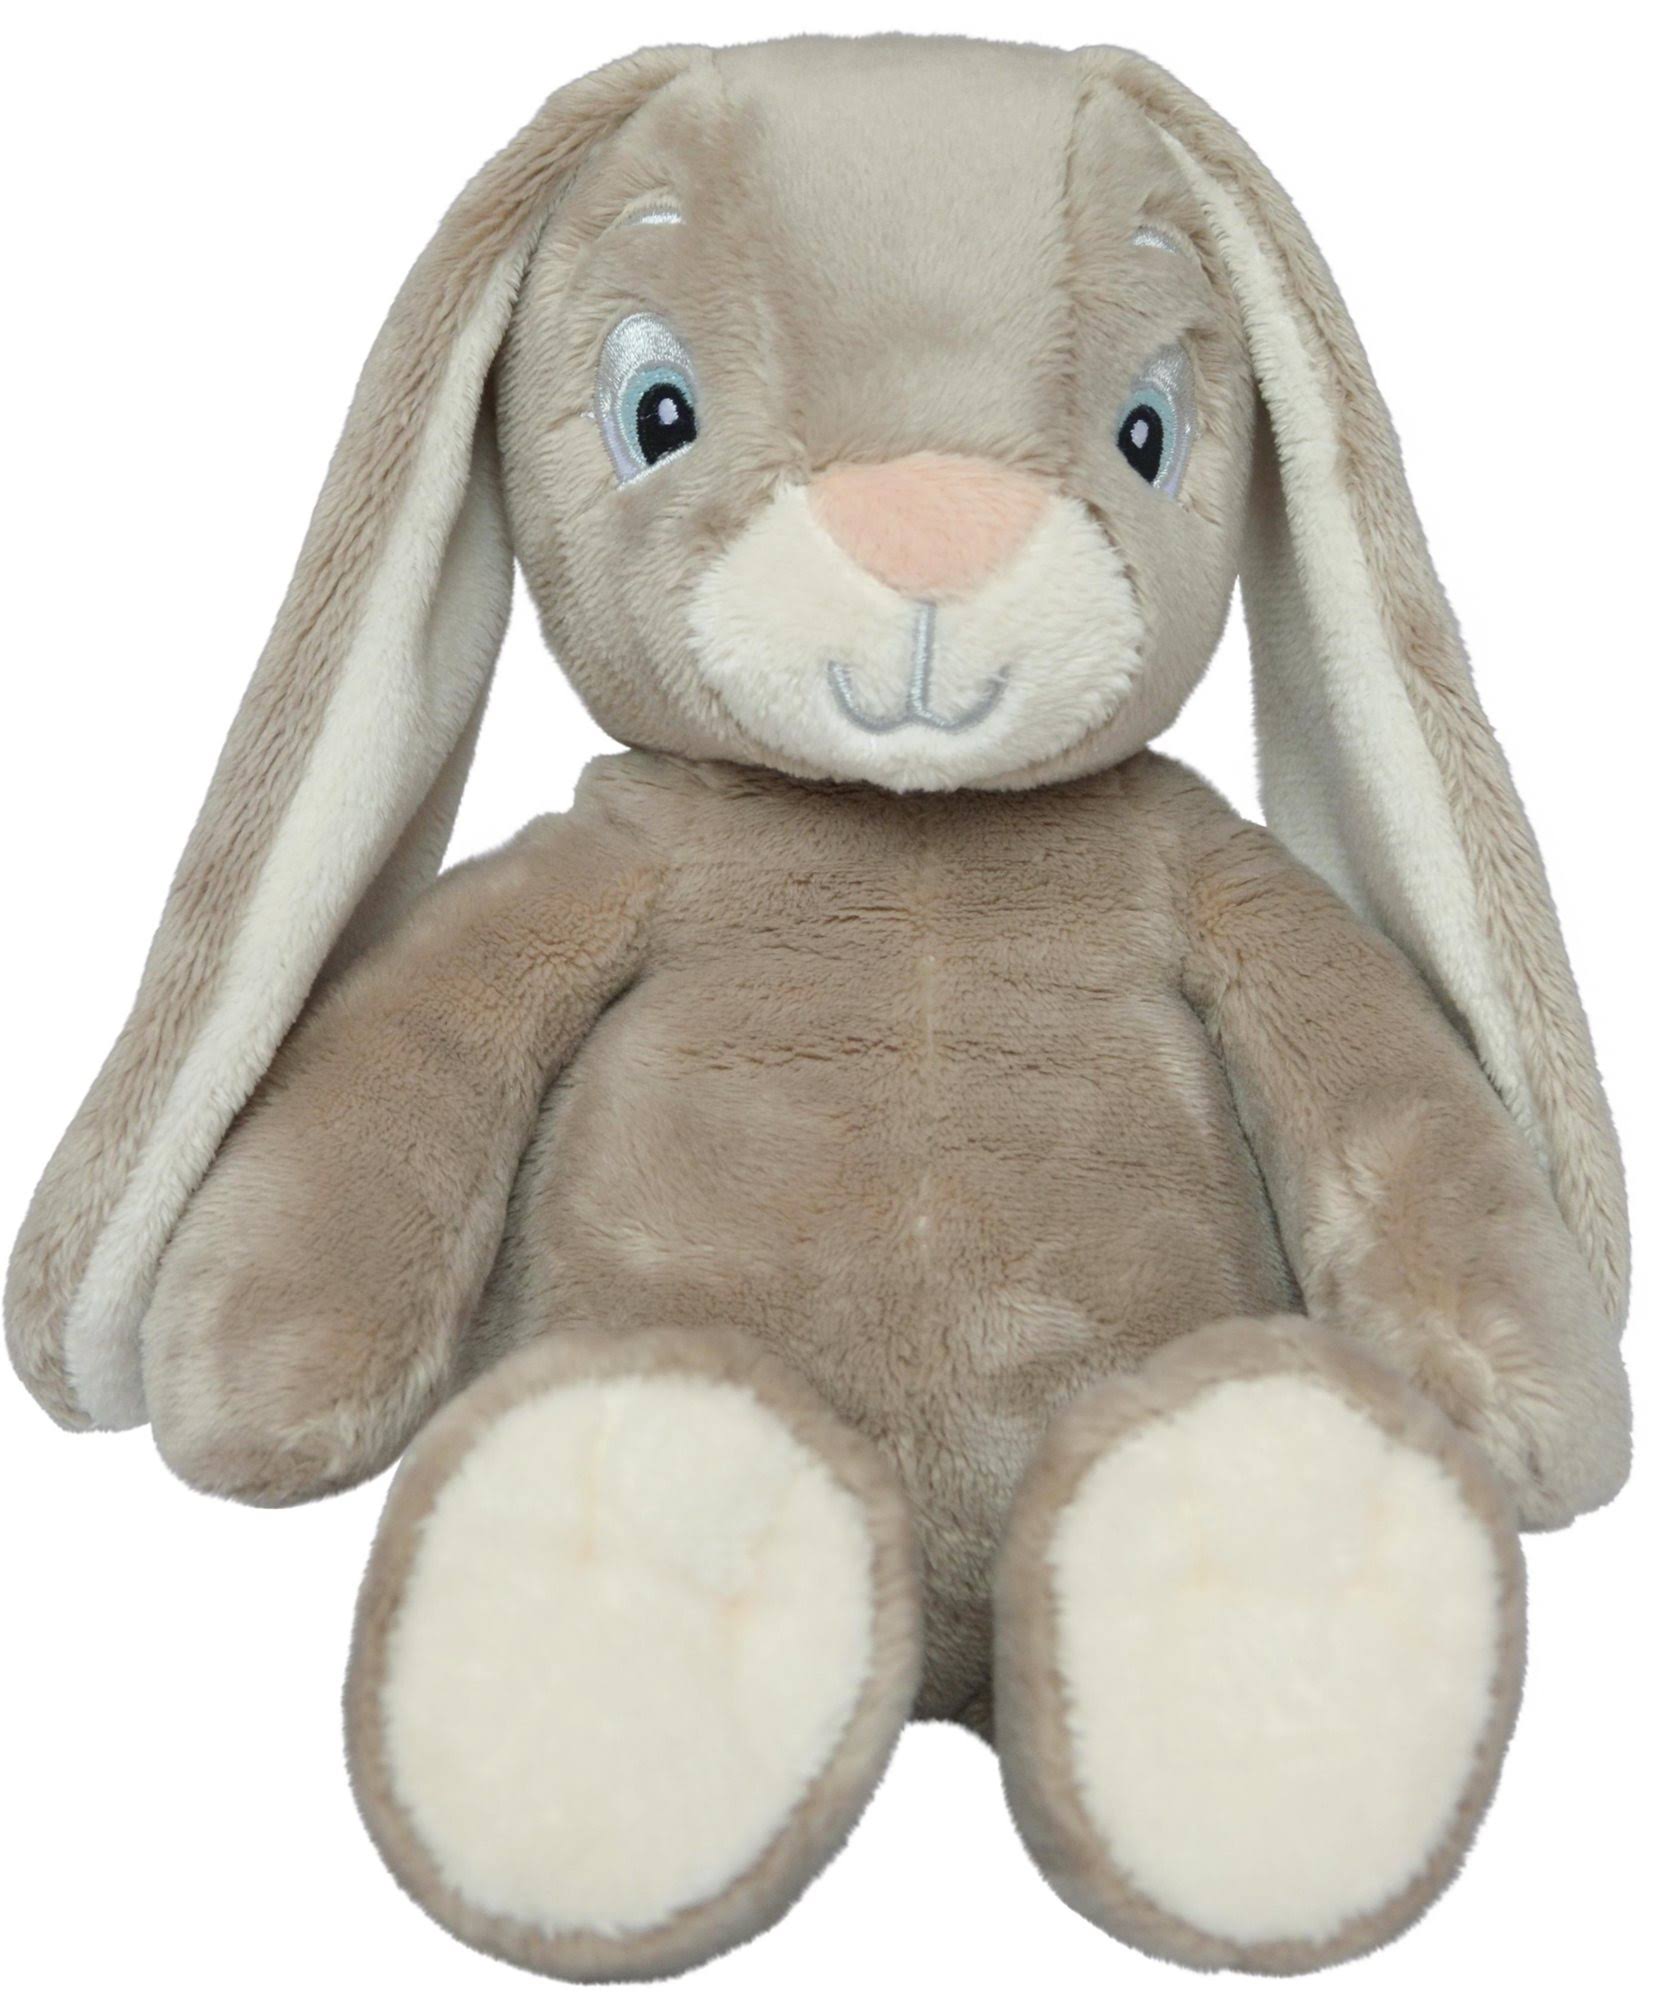 My Teddy Soft Toy - 20 cm - Rabbit - Brown